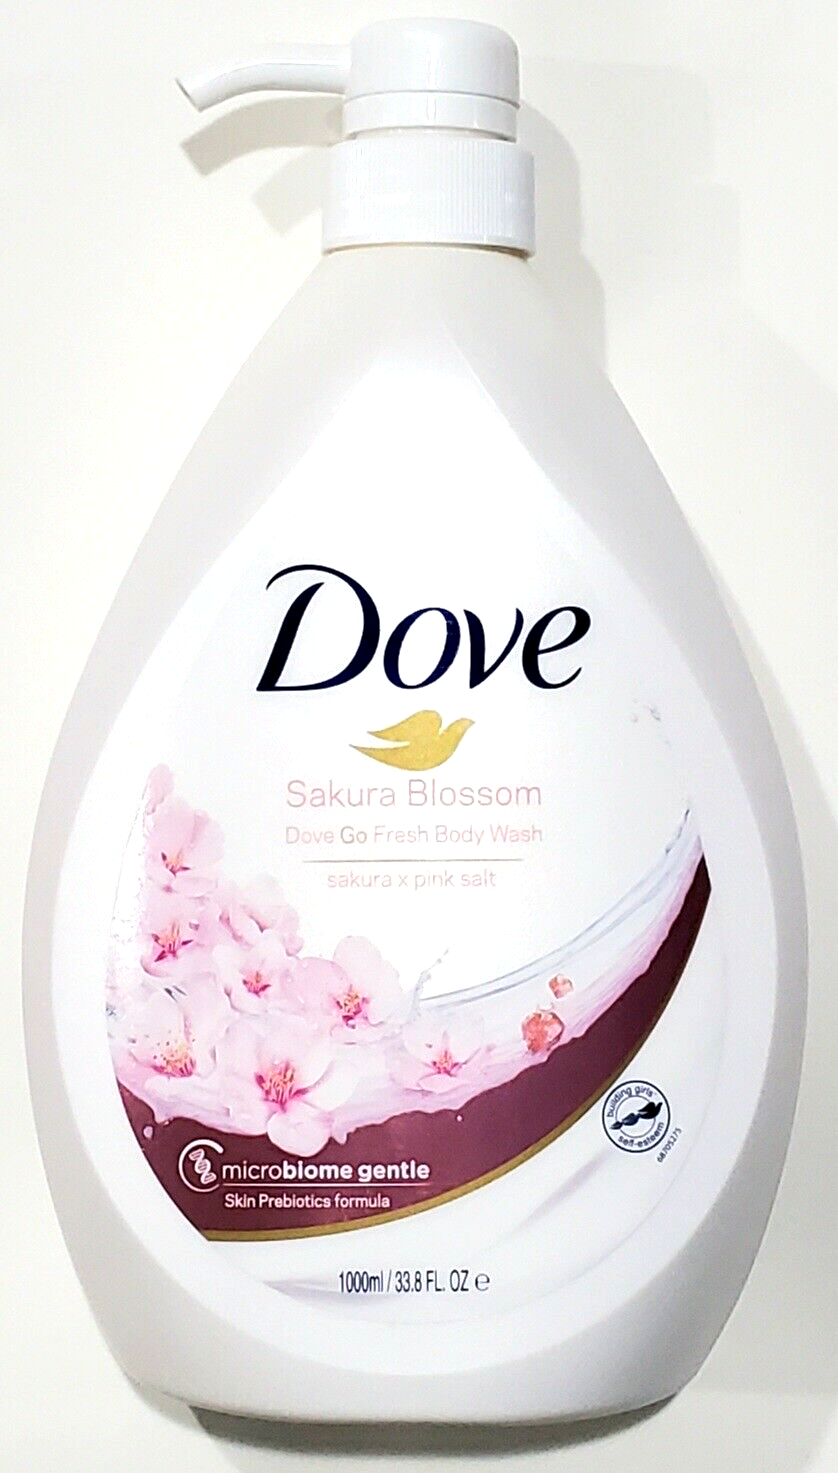 Primary image for Dove Sakura Blossom Go Fresh Body Wash Skin Prebiotics Formula 33.8 Oz.